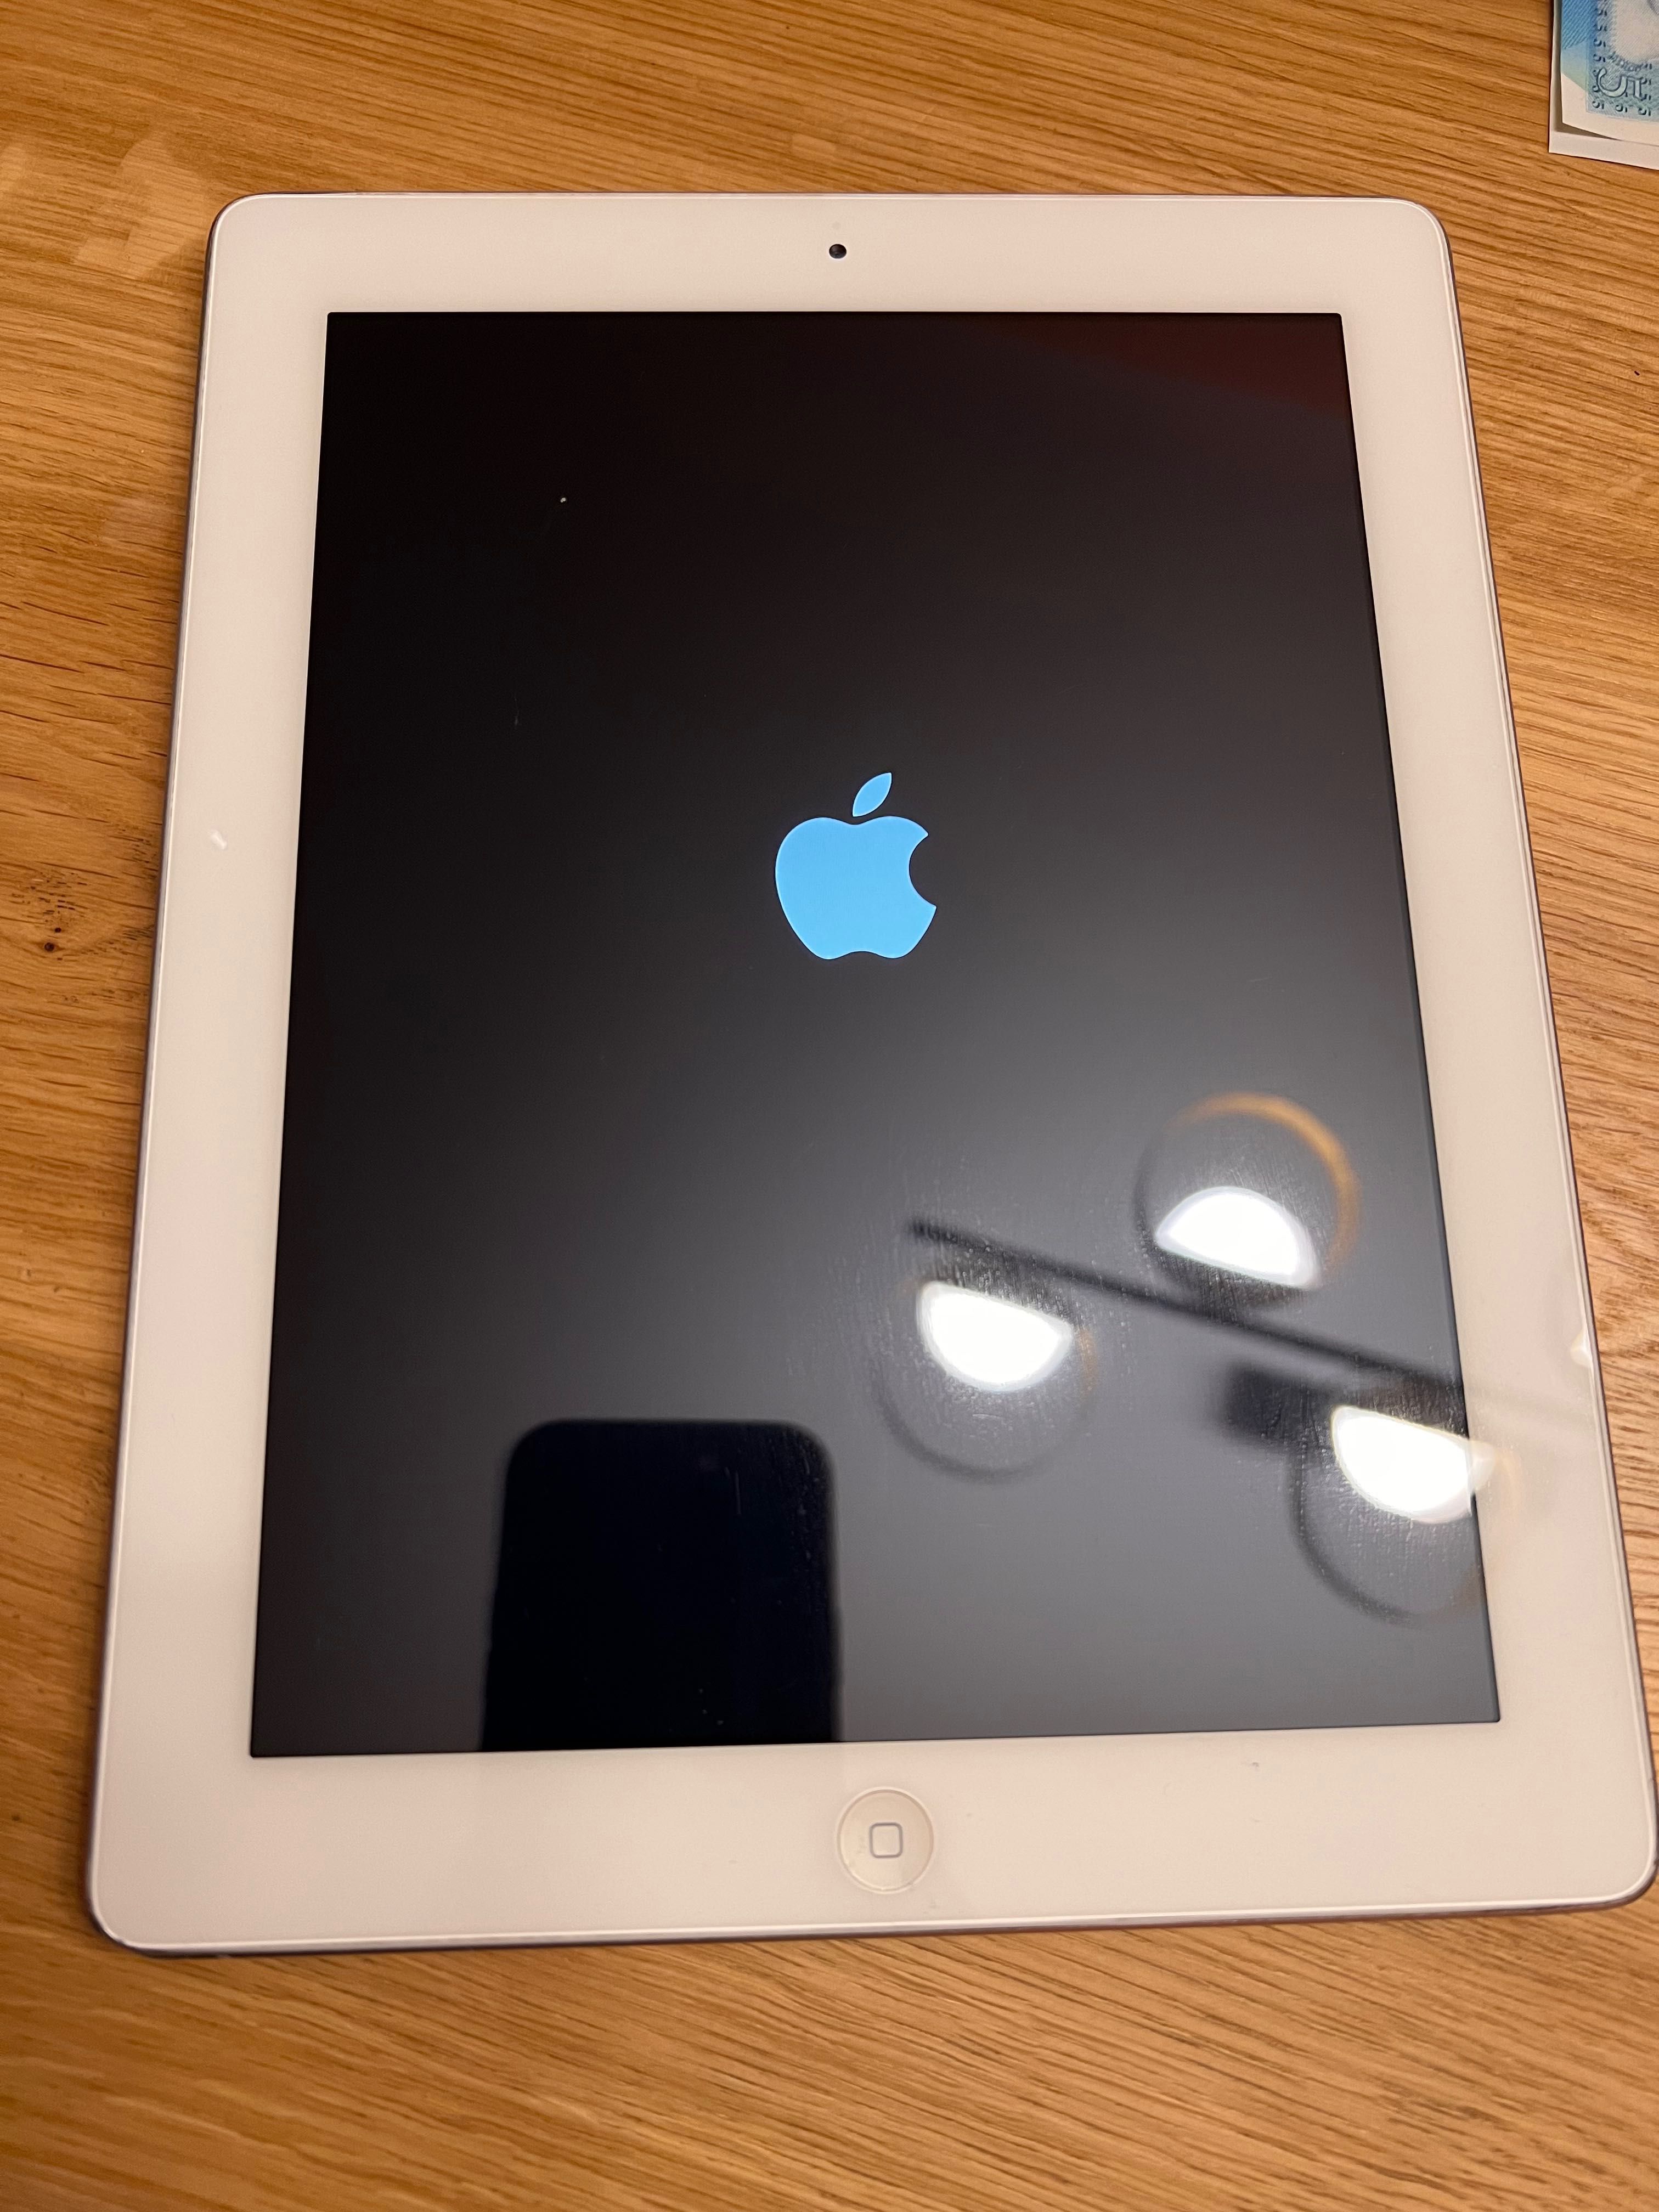 Apple iPad 3rd Gen. A1416 16GB, Wi-Fi, 9.7in